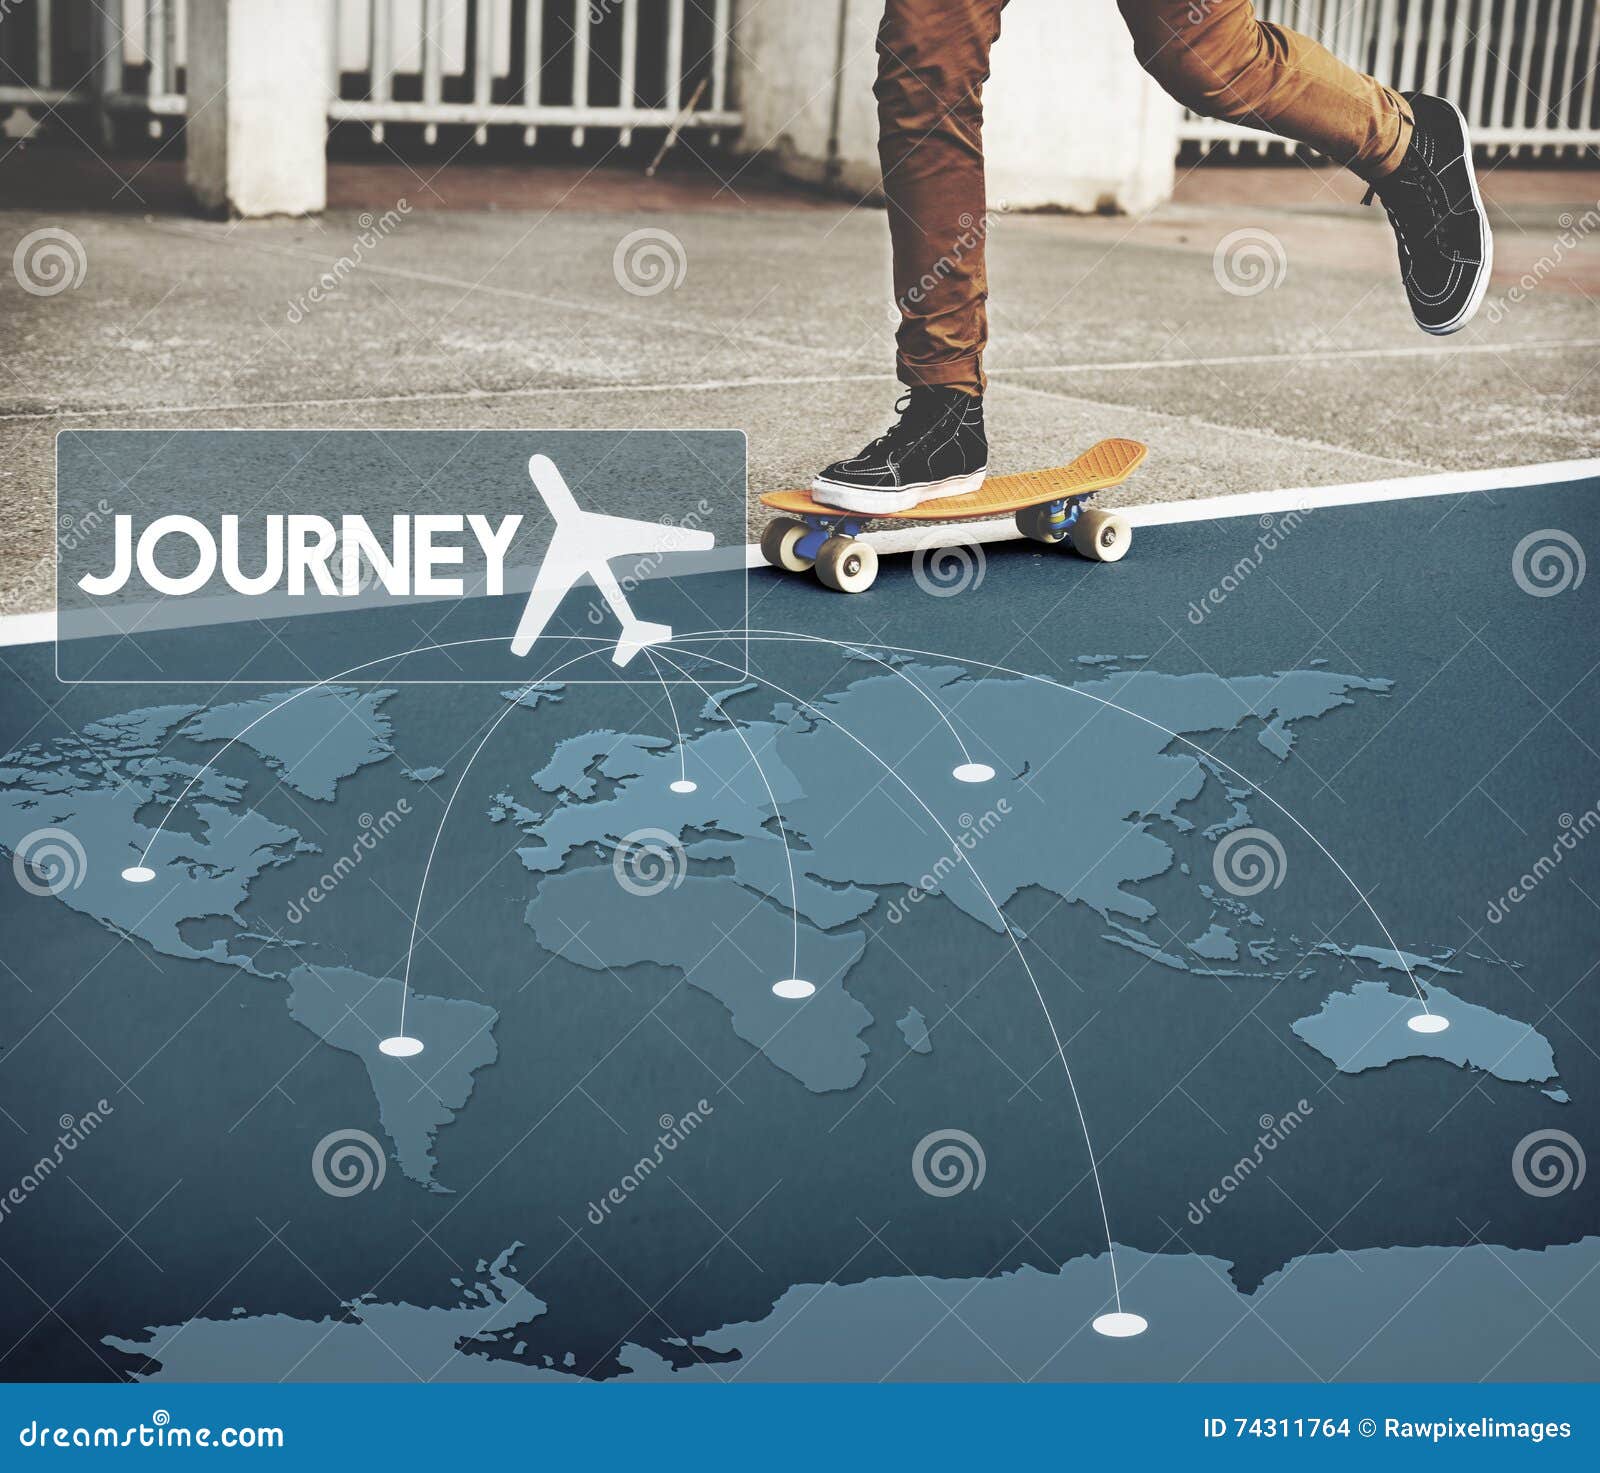 Journey destination. Direct Flight. Connected Flight. Connecting Flight. Connecting Flights картинка.